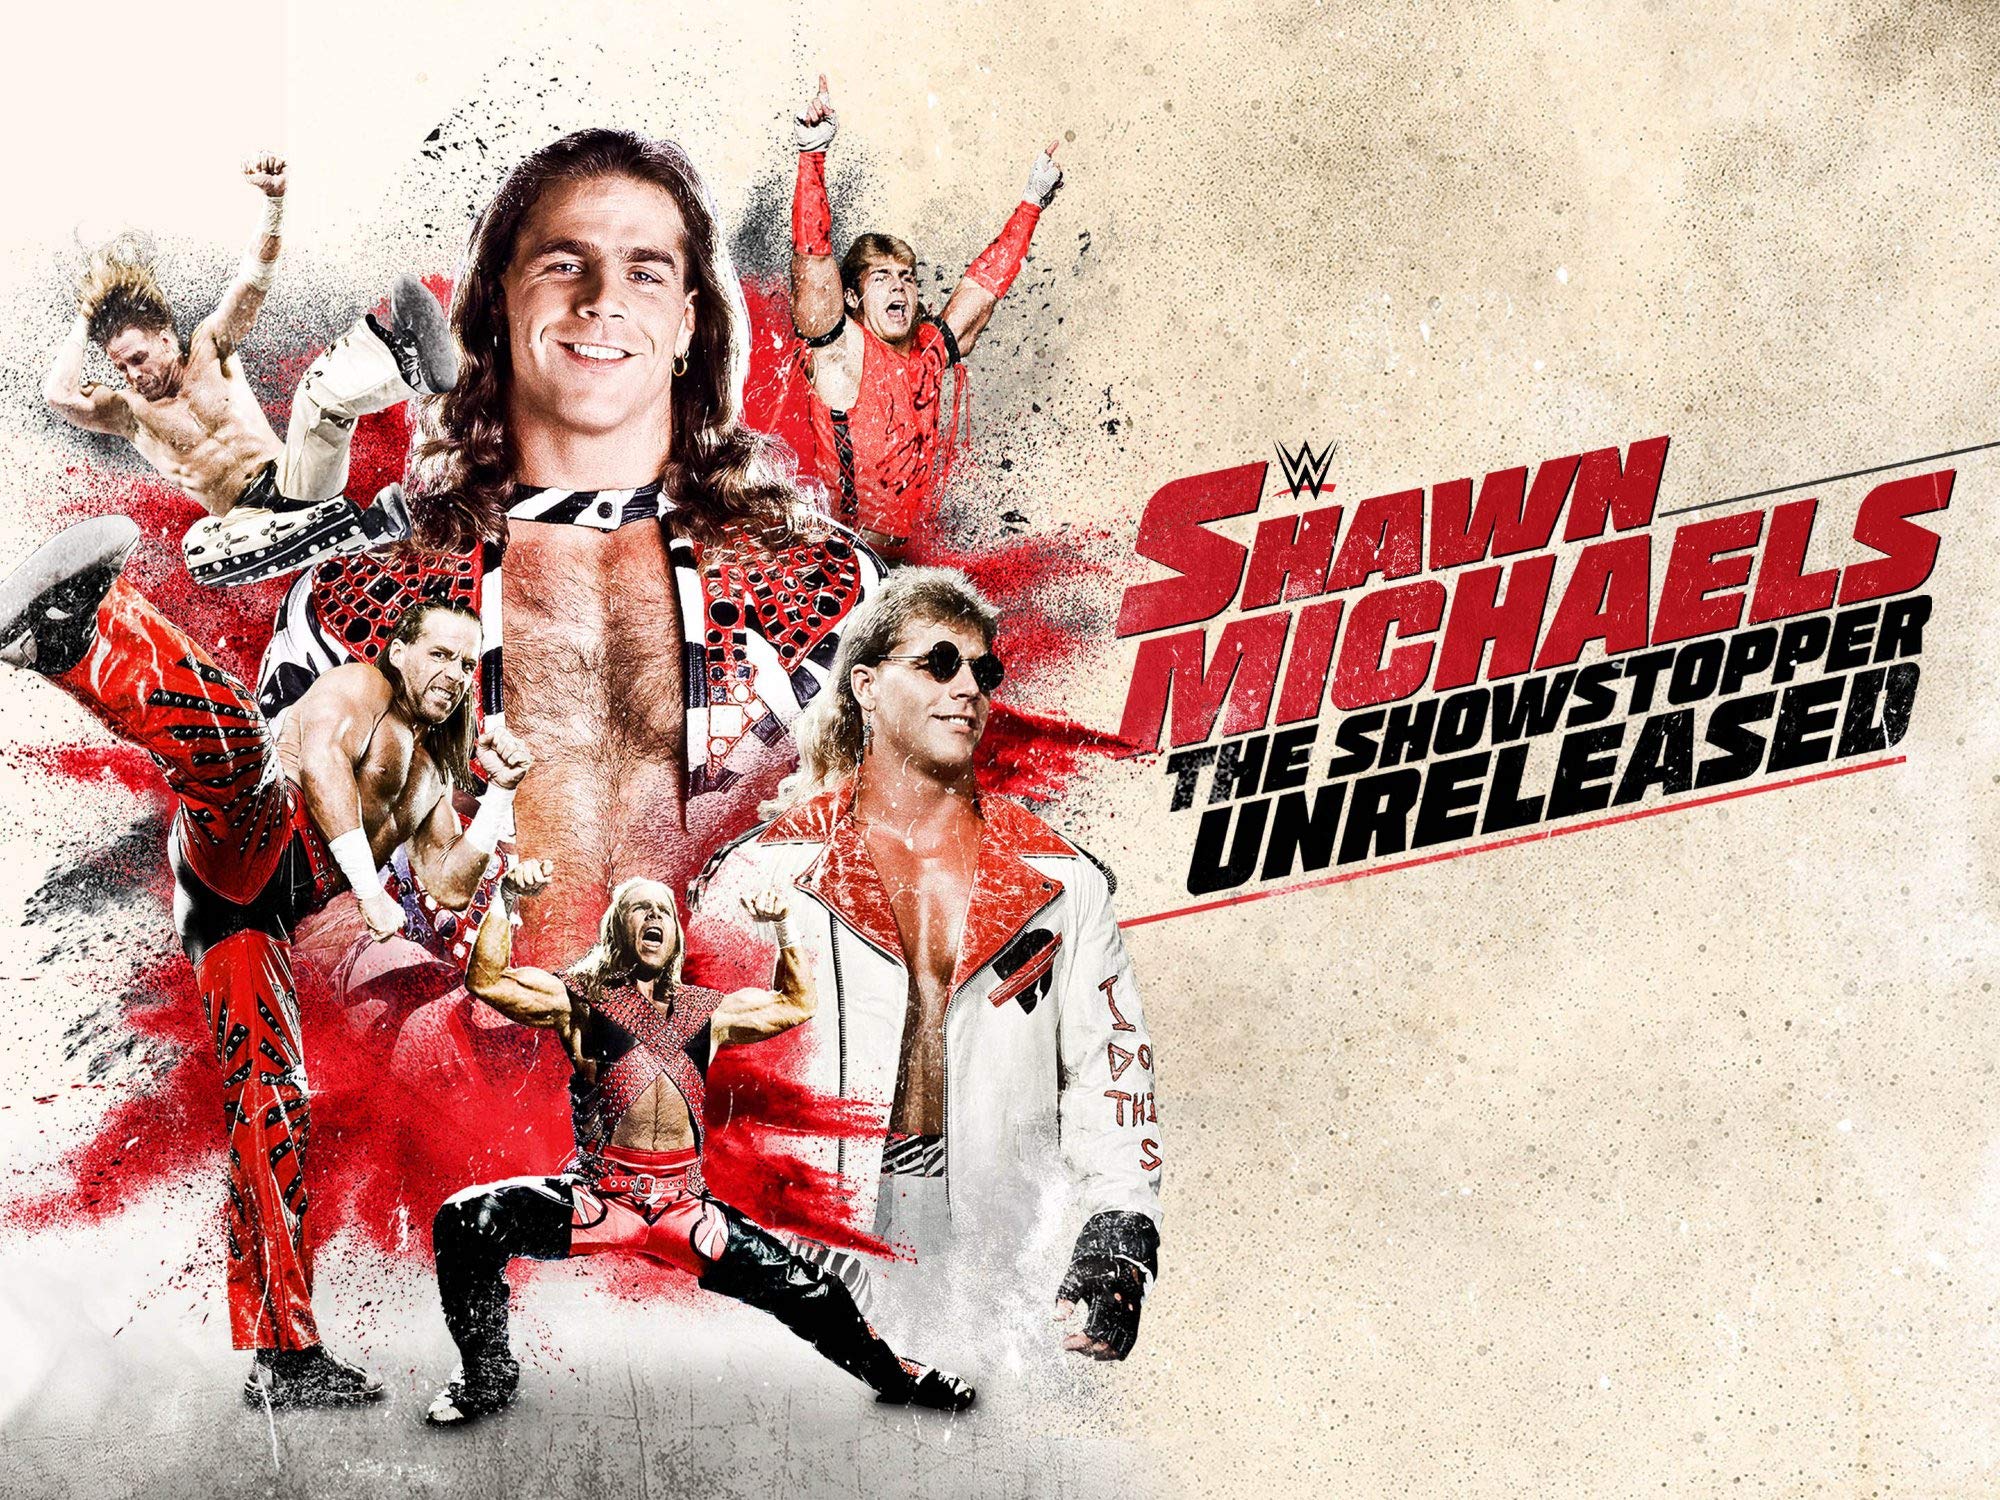 Shawn Michaels  Dreams come true at WWE WrestleMania  Facebook